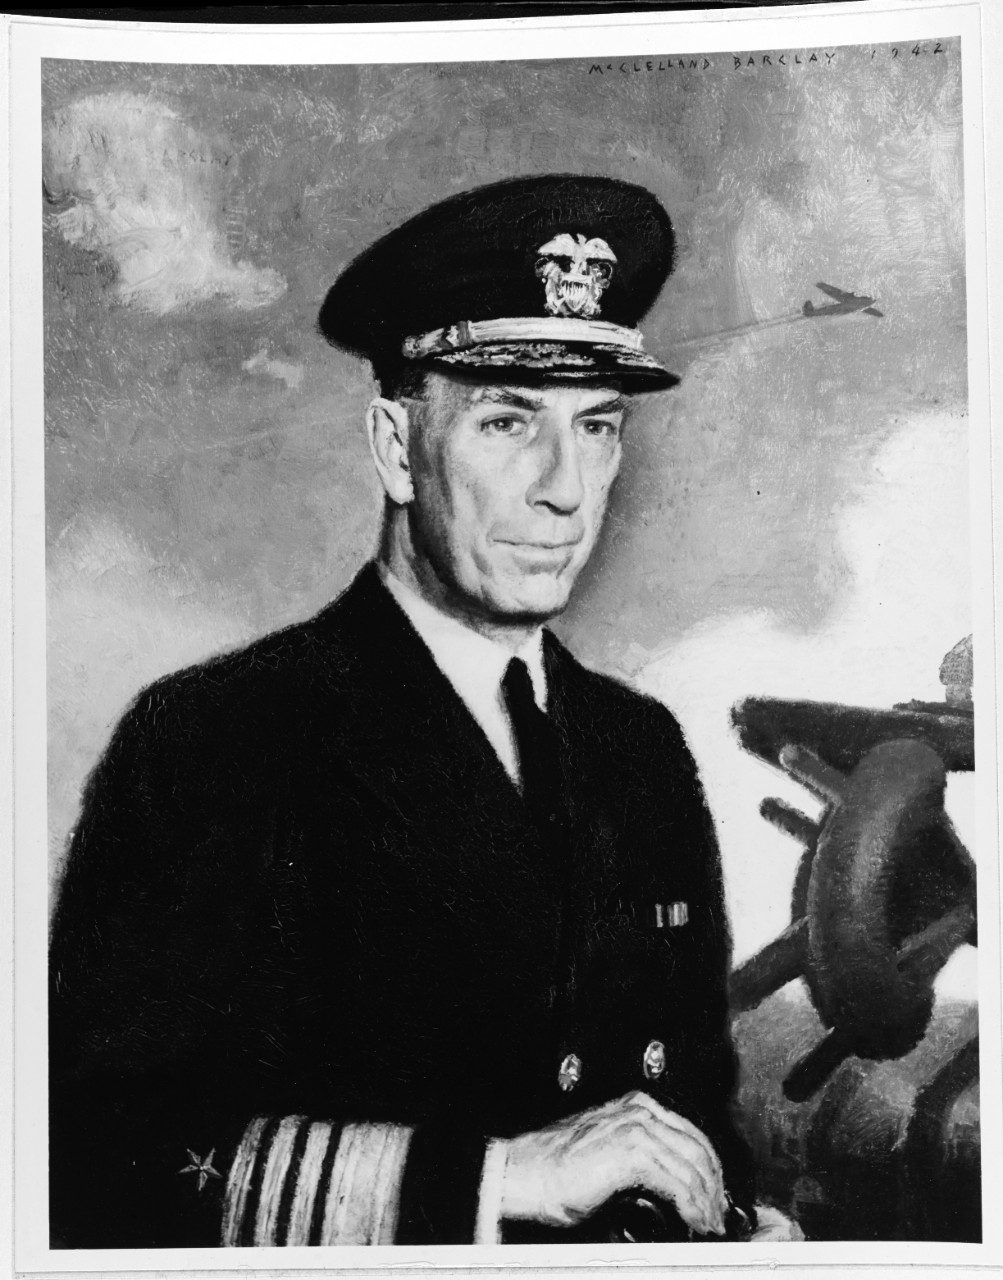 Admiral Royall E. Ingersoll, USN